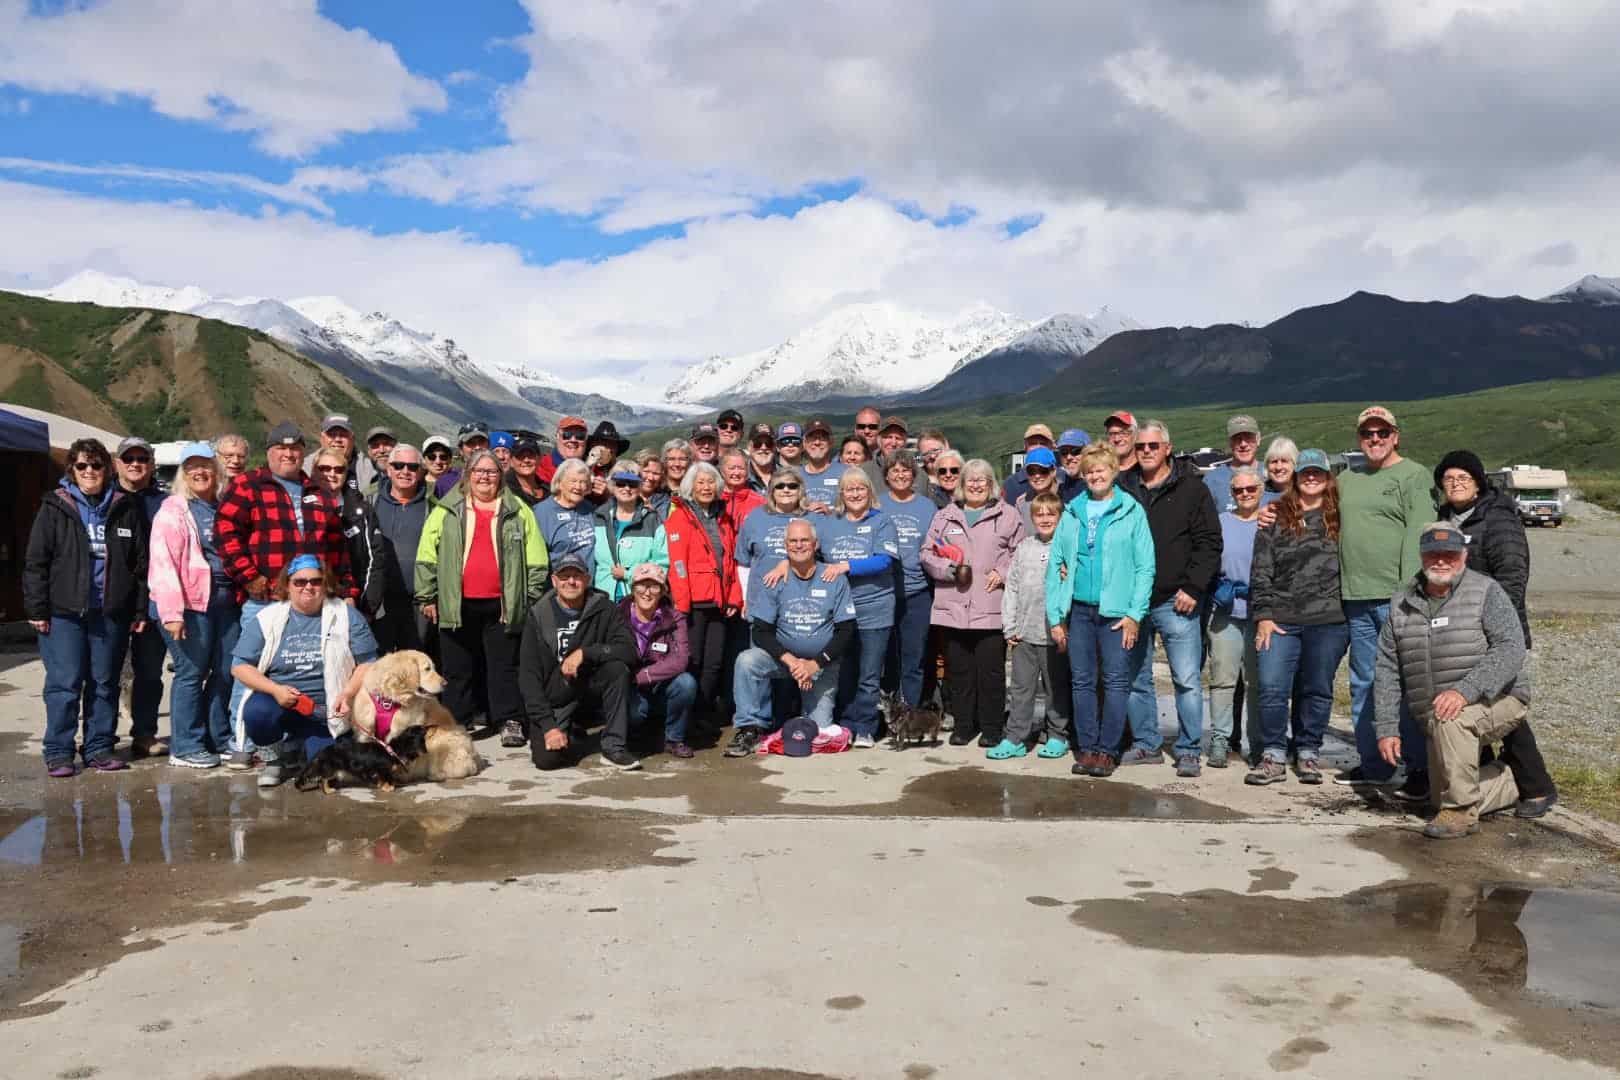 RVing to Alaska Rally Group Photo in Alaska